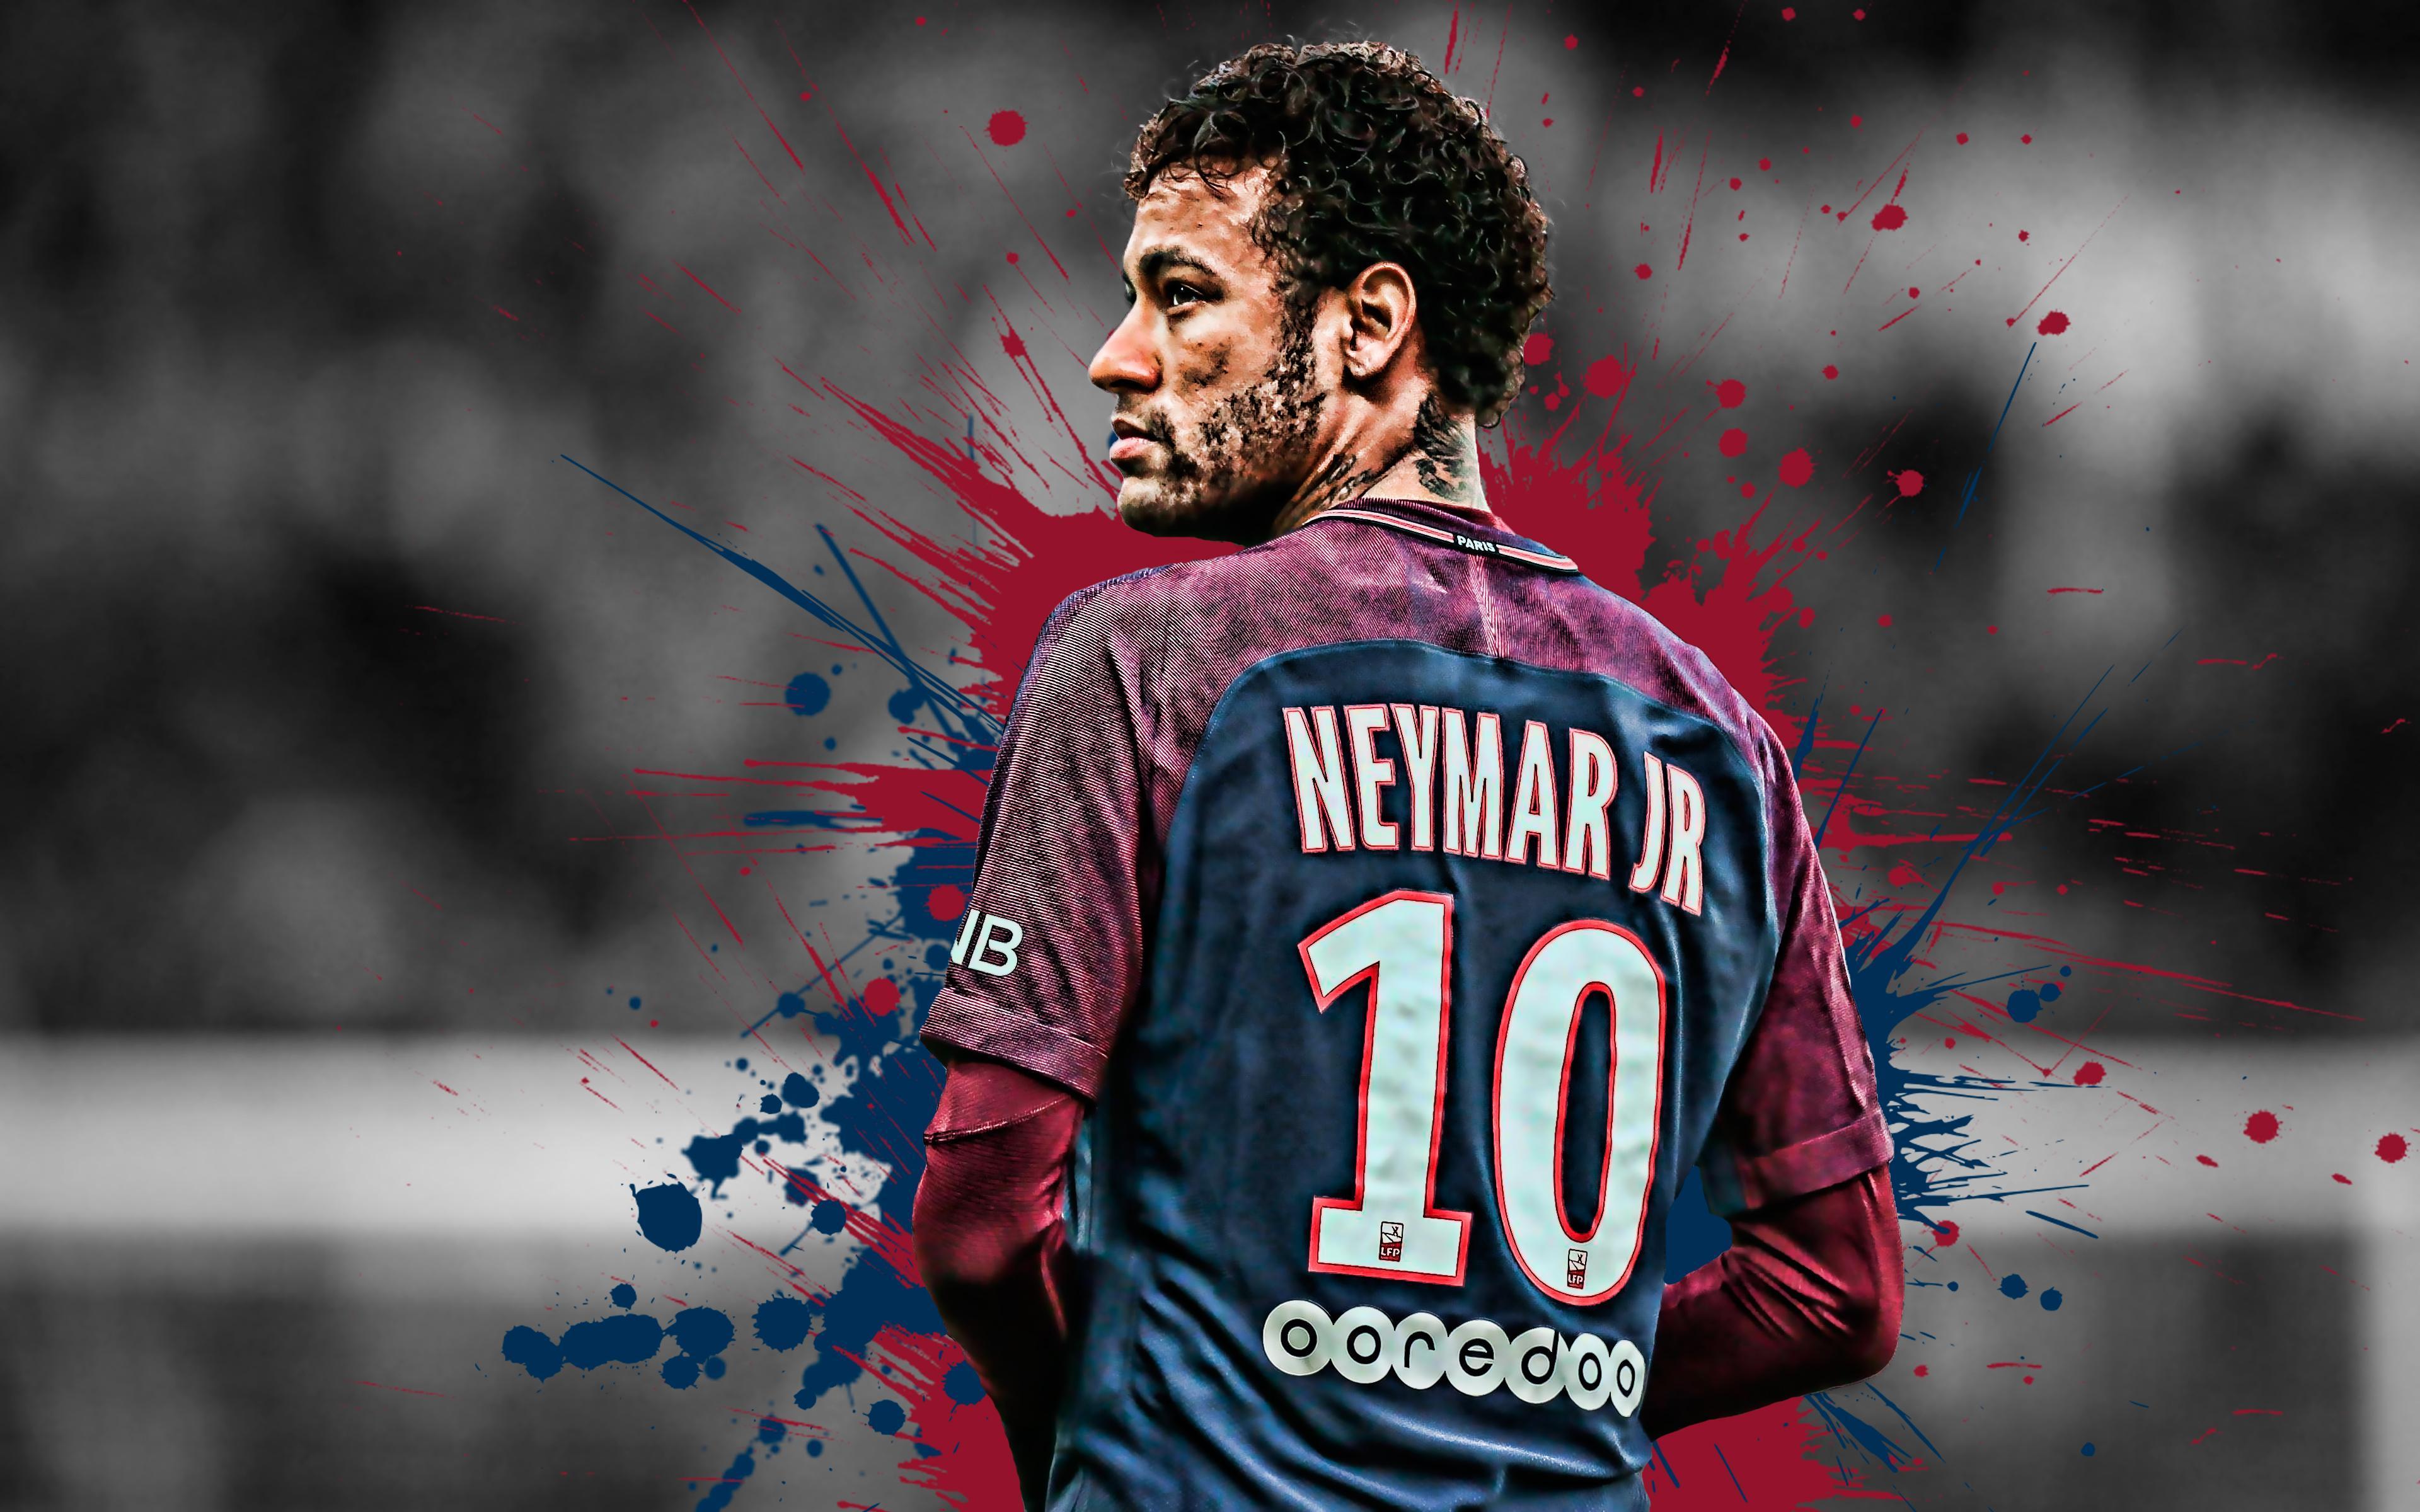 3840 x 2400 · jpeg - Neymar Jr Photos Hd - Wallpaper Neymar Jr Hd 7 By Sr Black On ...